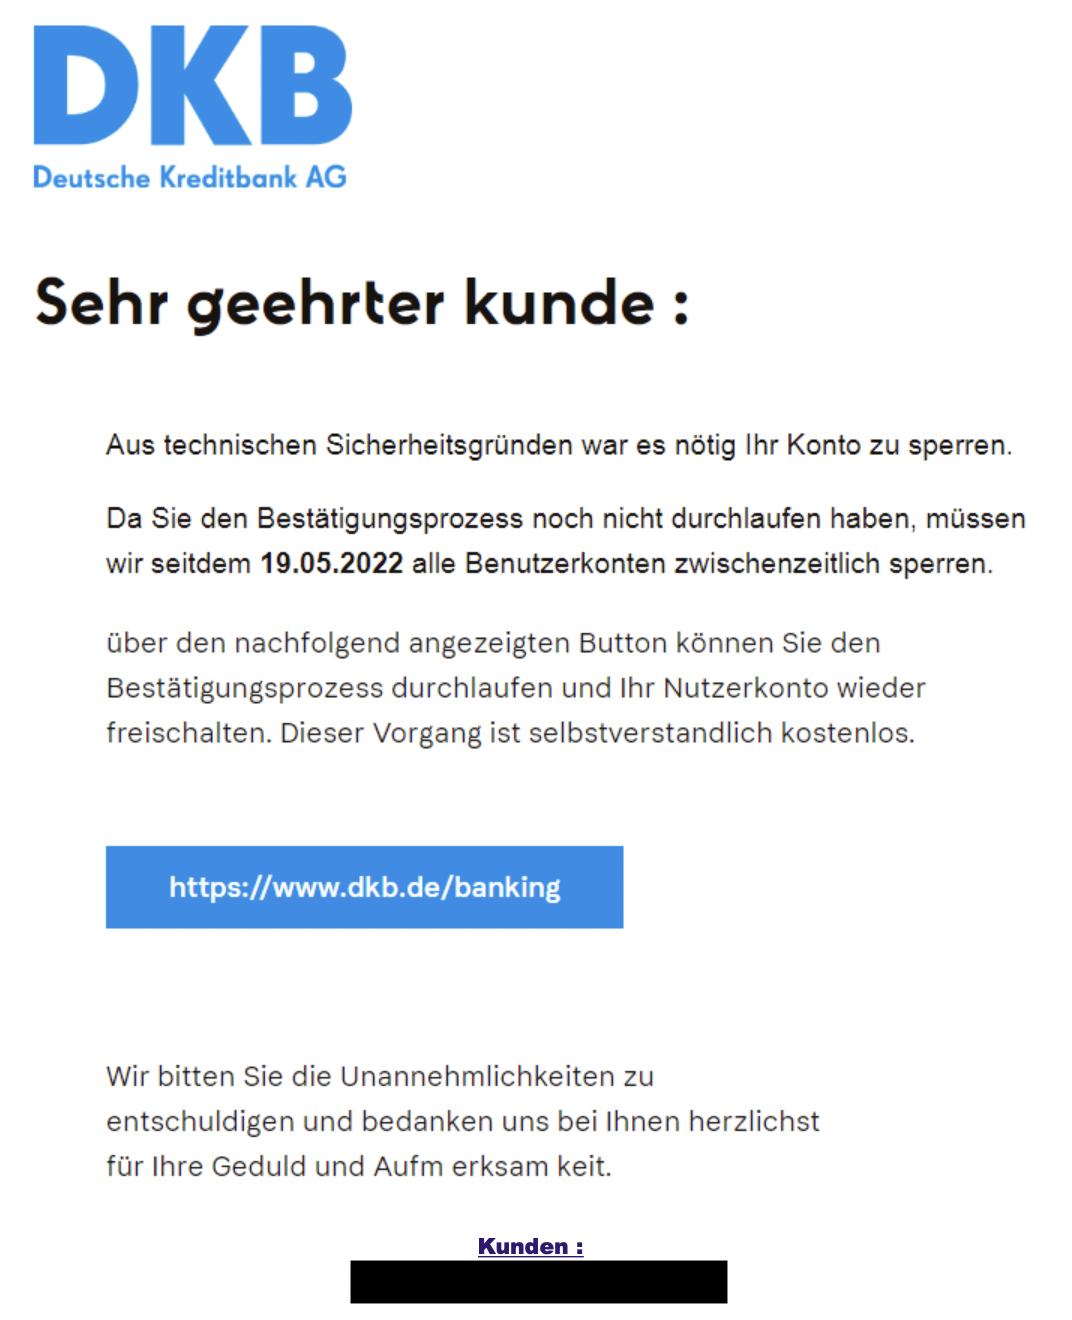 DKB Phishing